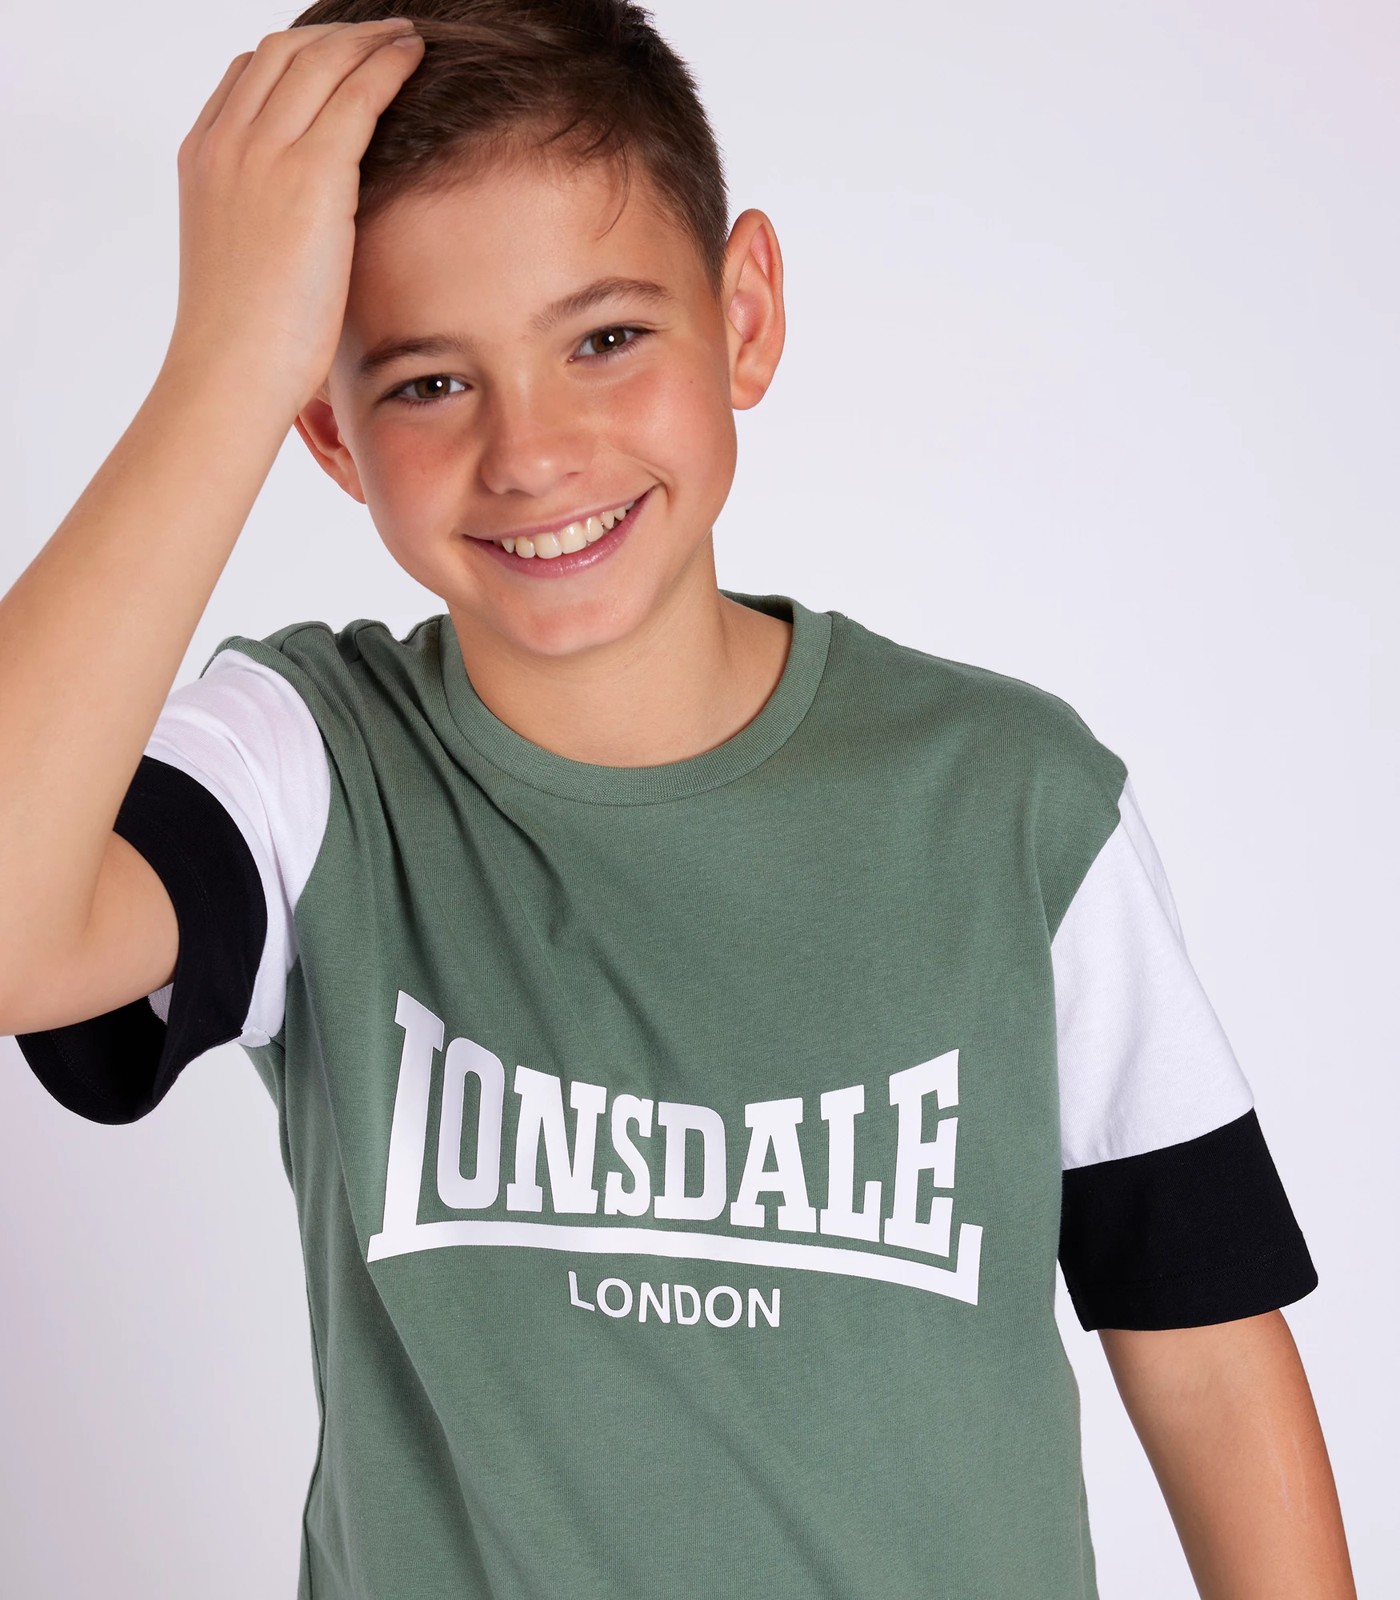 Lonsdale London Southgate T-shirt | Target Australia